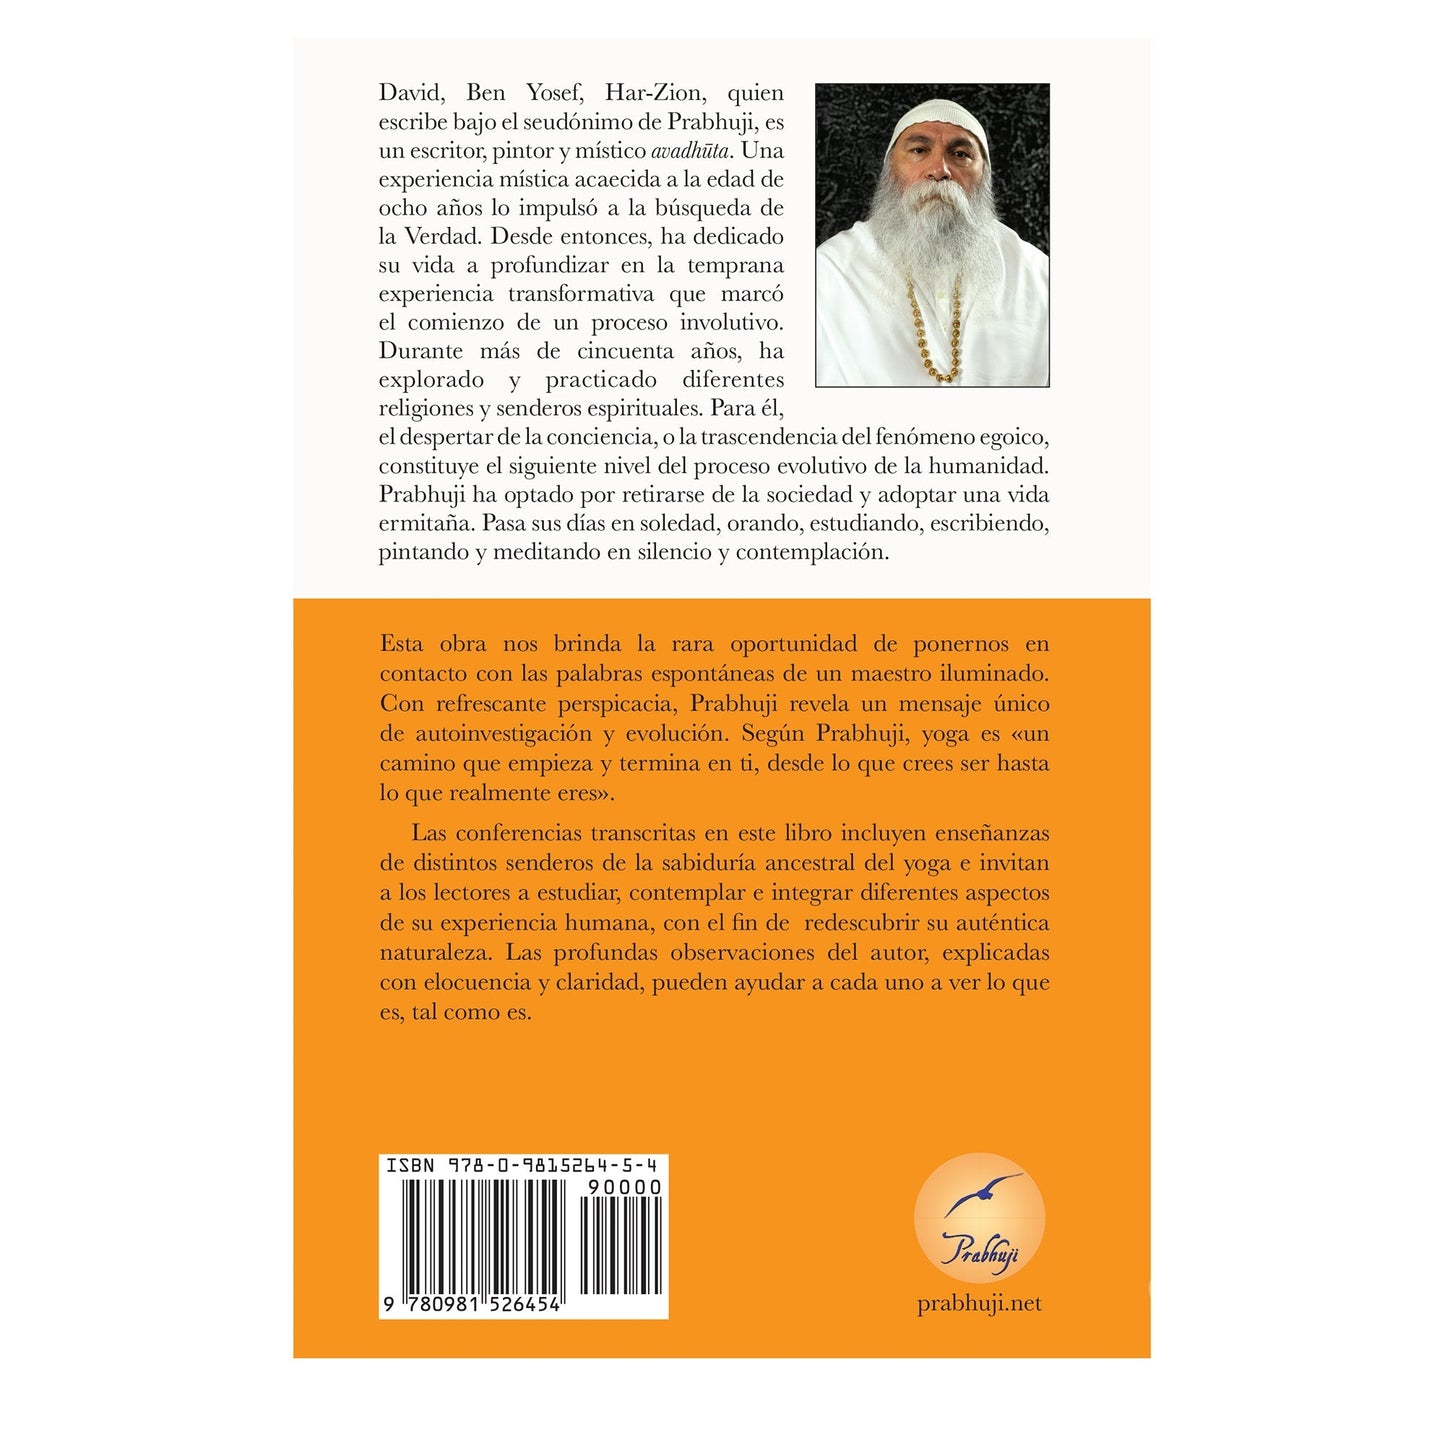 Lo que es, tal como es - Satsangas con Prabhuji (Paperback - Spanish) - Tree Spirit Wellness